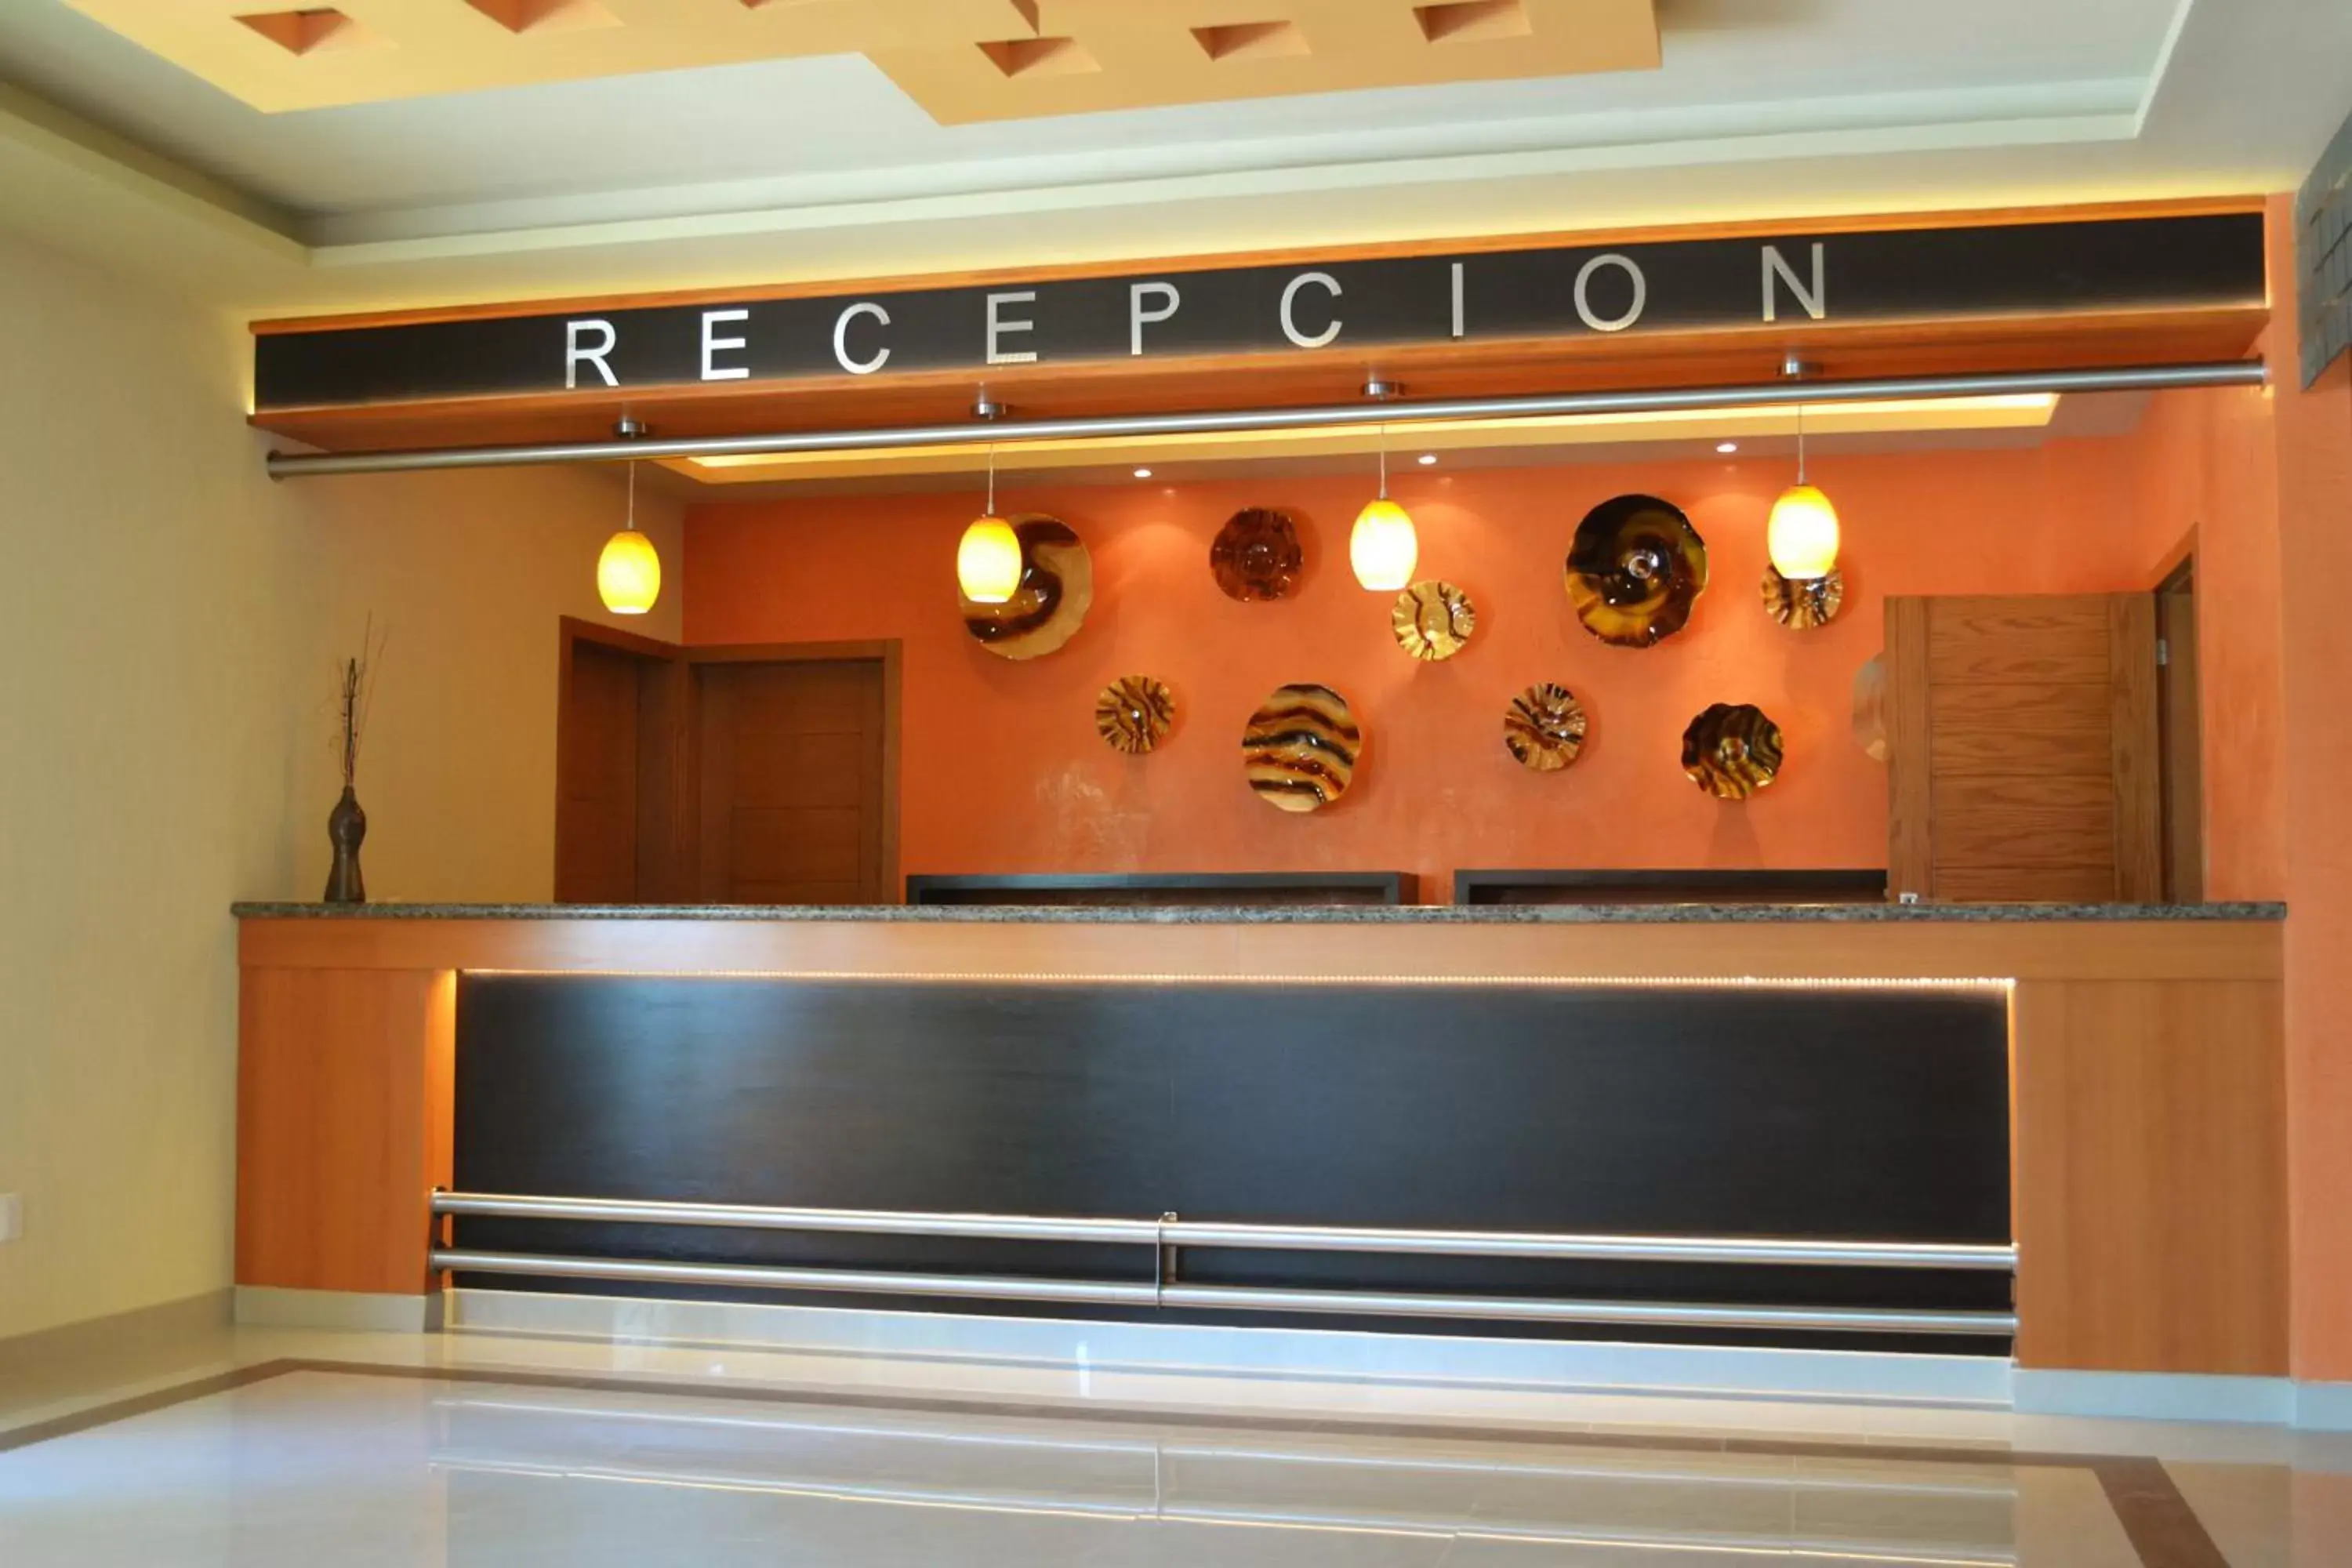 Lobby or reception, Lobby/Reception in Hostalia Hotel Expo & Business Class